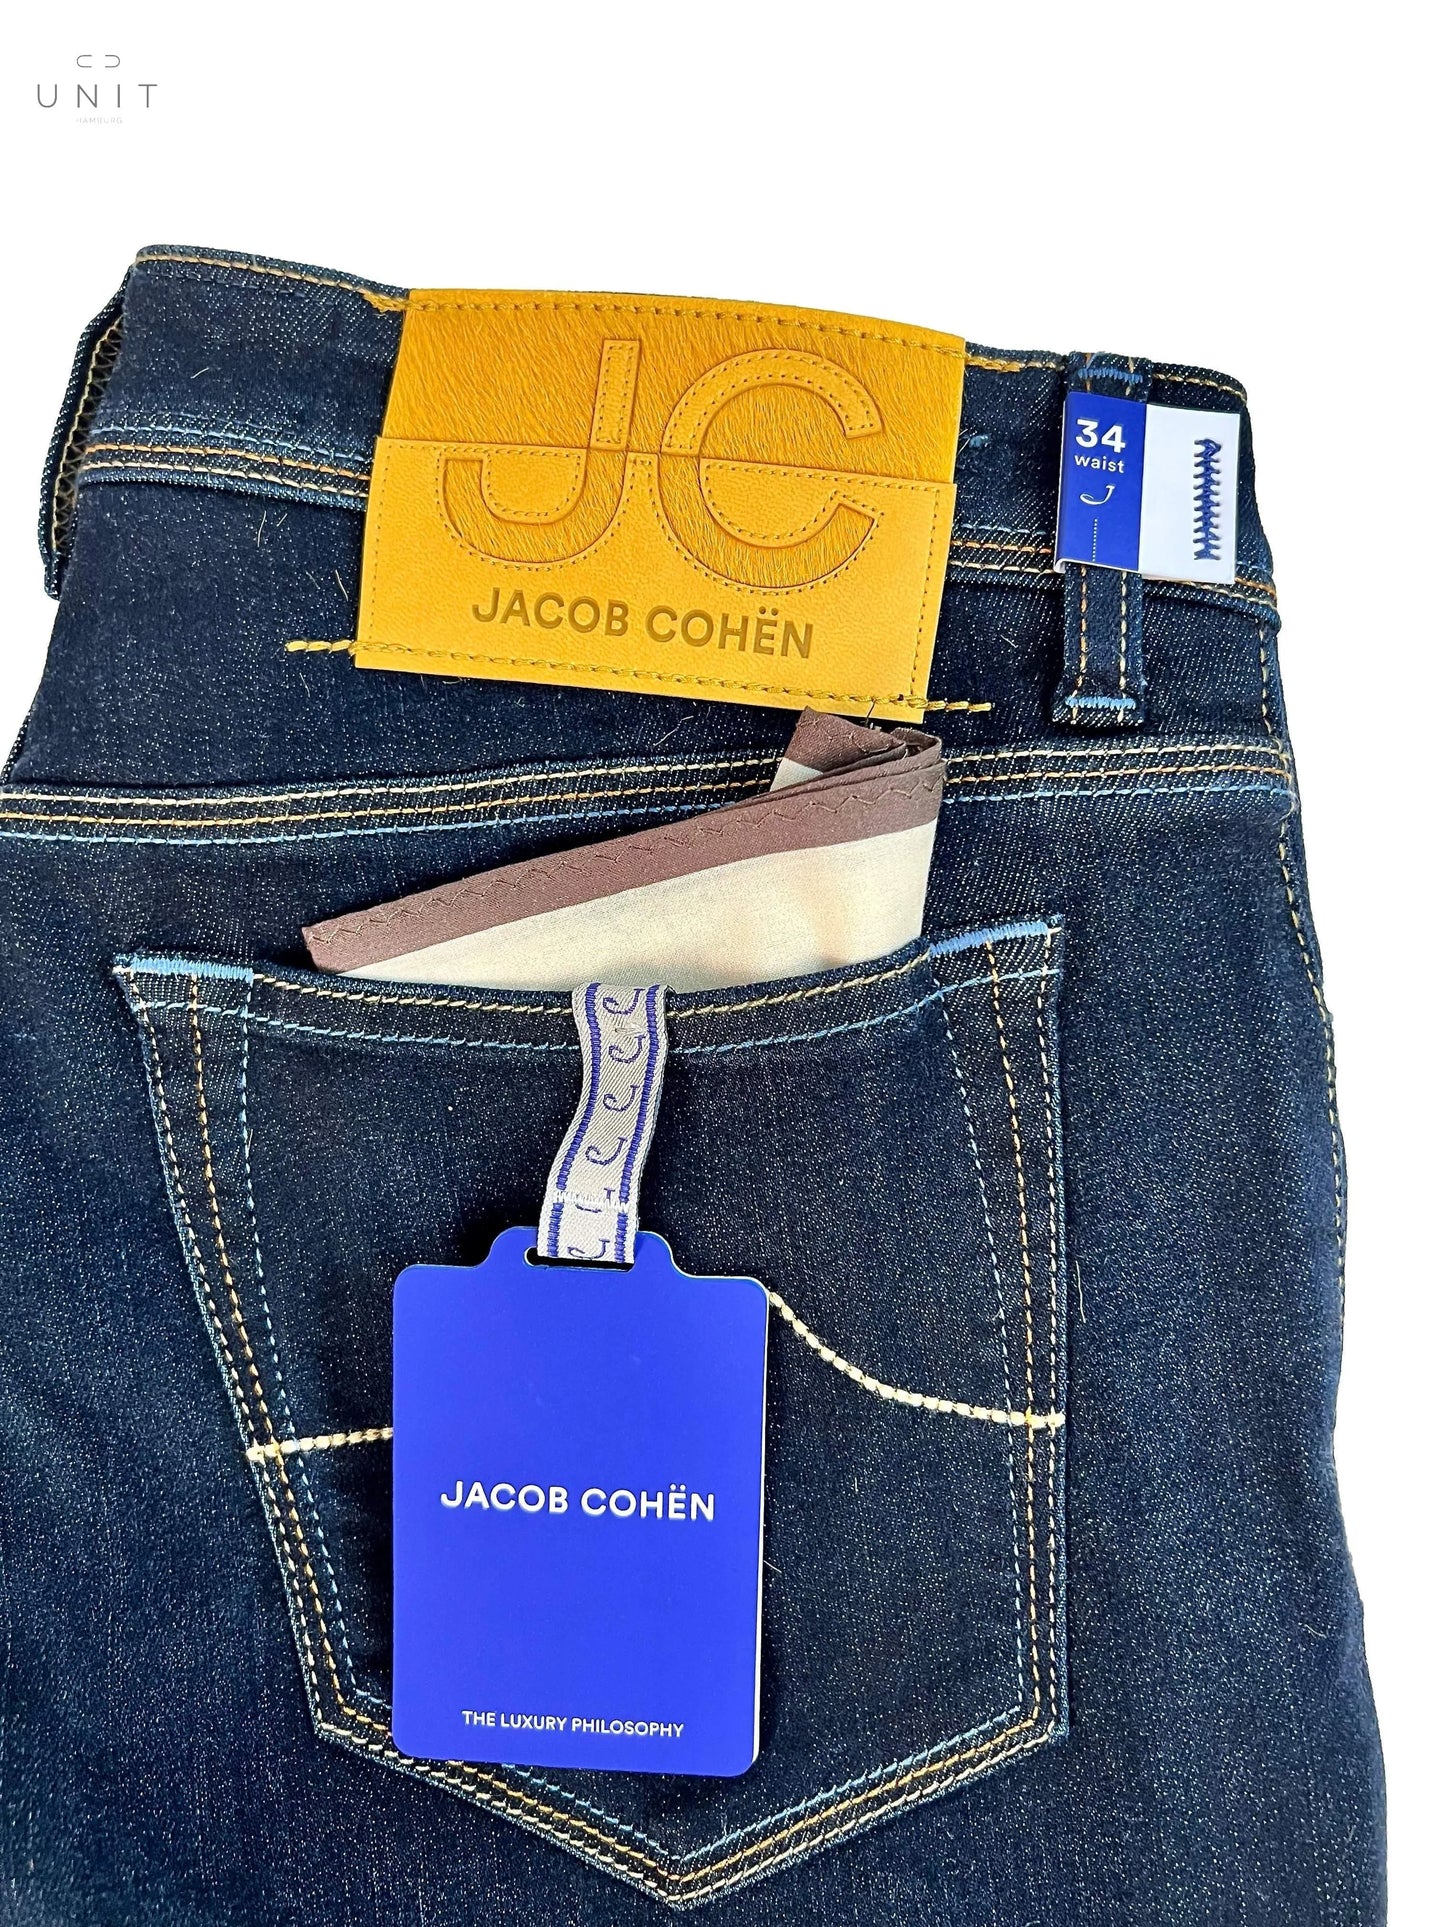 liegend gesehen Jacob Cohen UQM04 39 S 3582 BARD yellow label dark blue